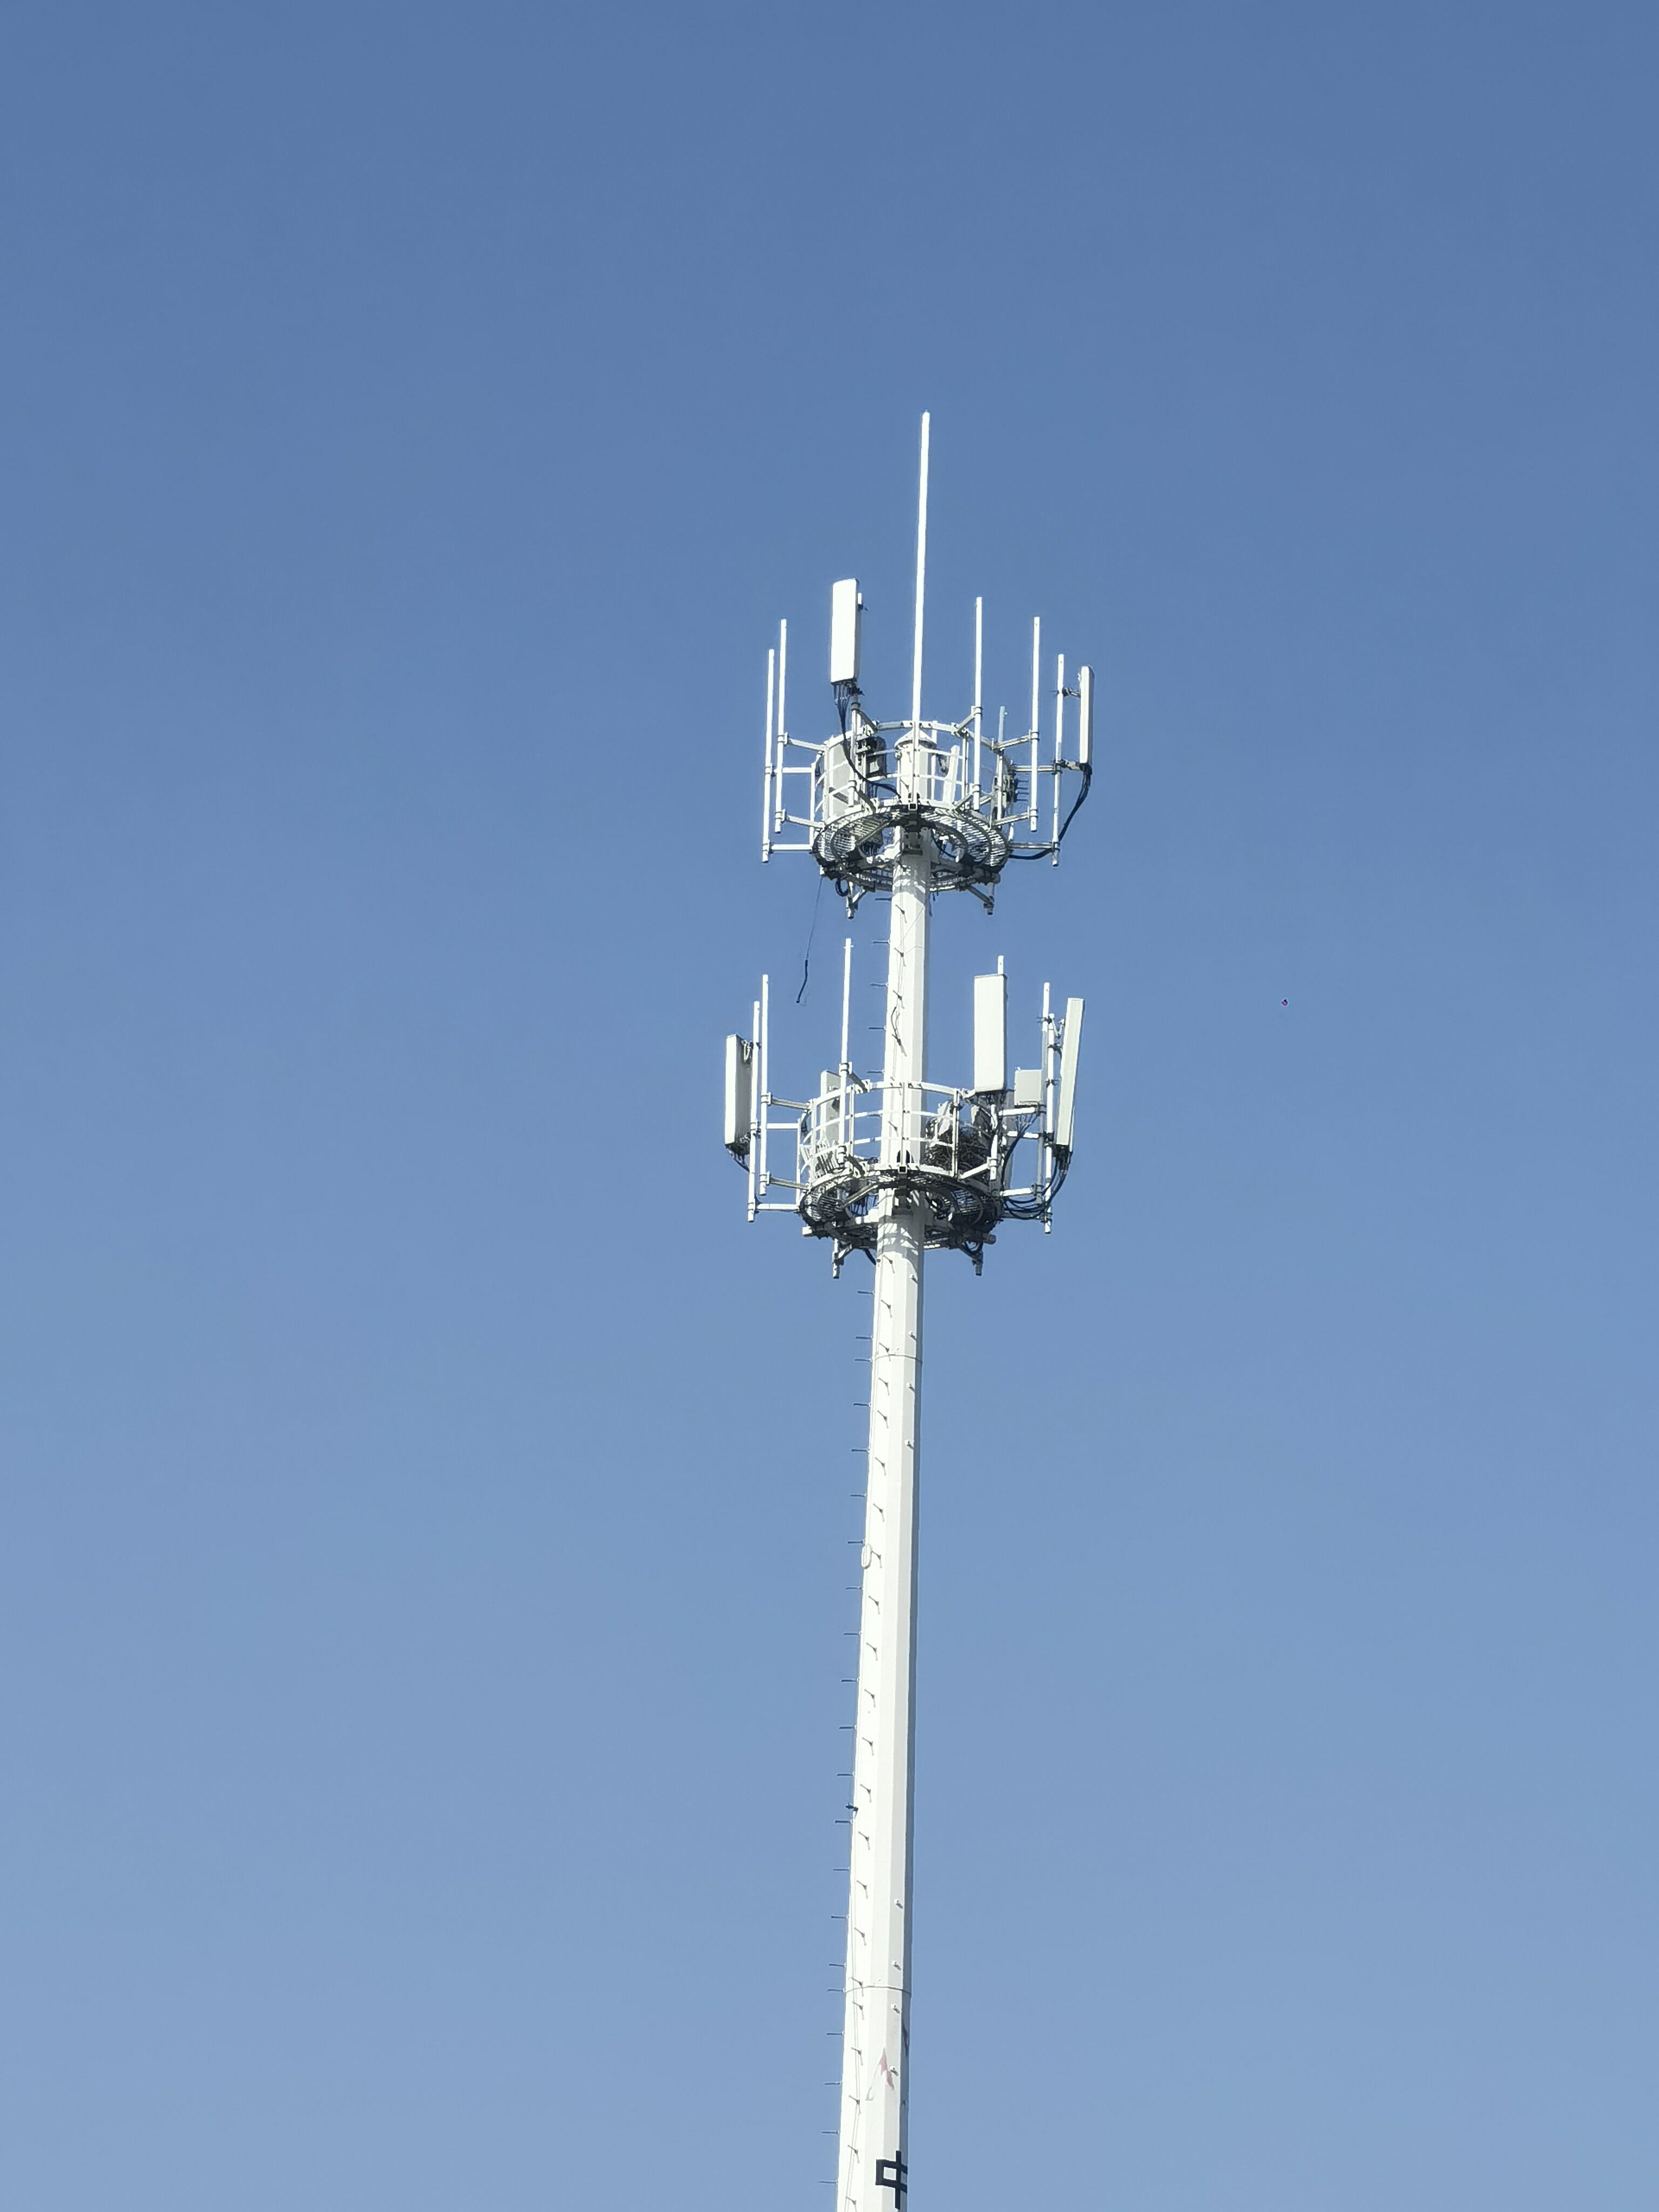 Monopol-Turm-Antennen-Kommunikationsübertragungsfabrik